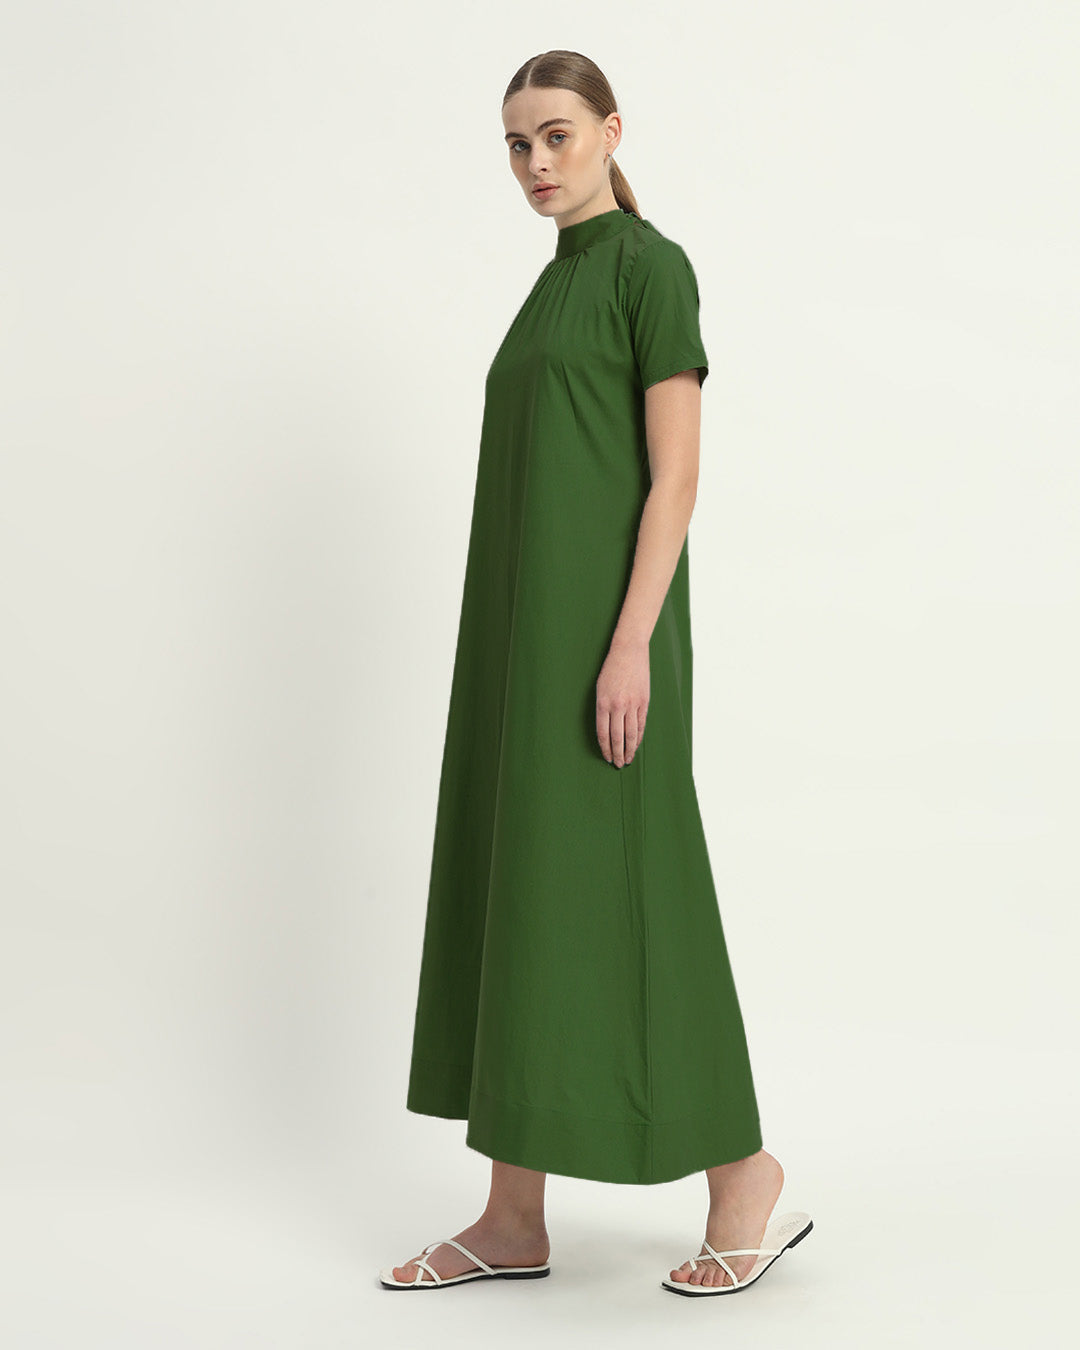 The Emerald Hermon Cotton Dress